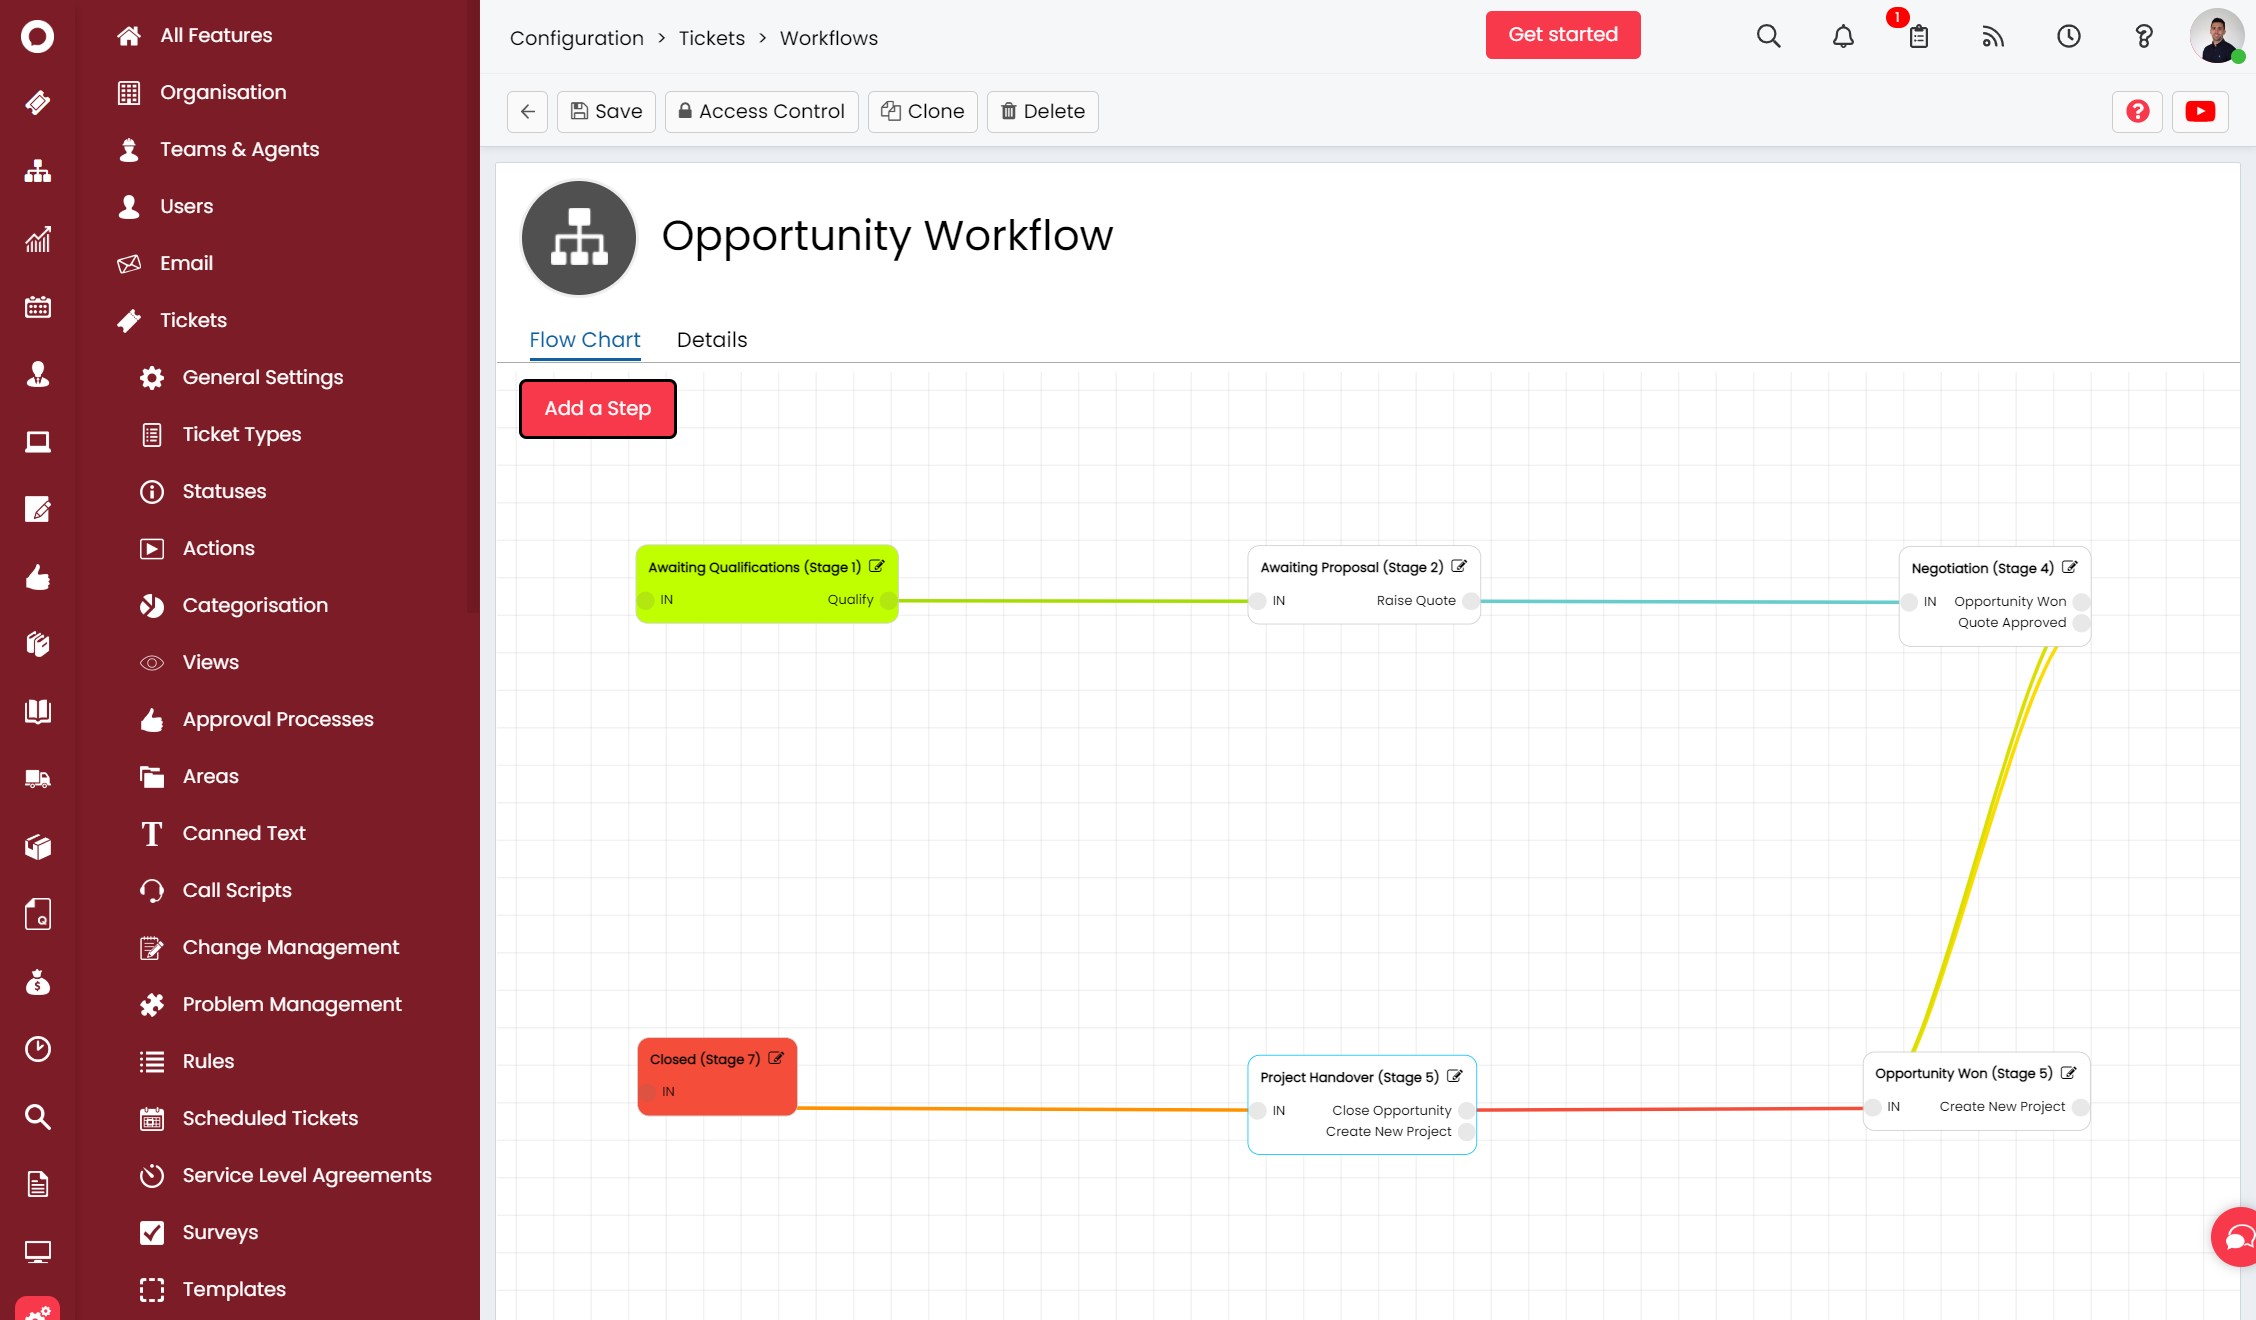 Opportunity Workflow